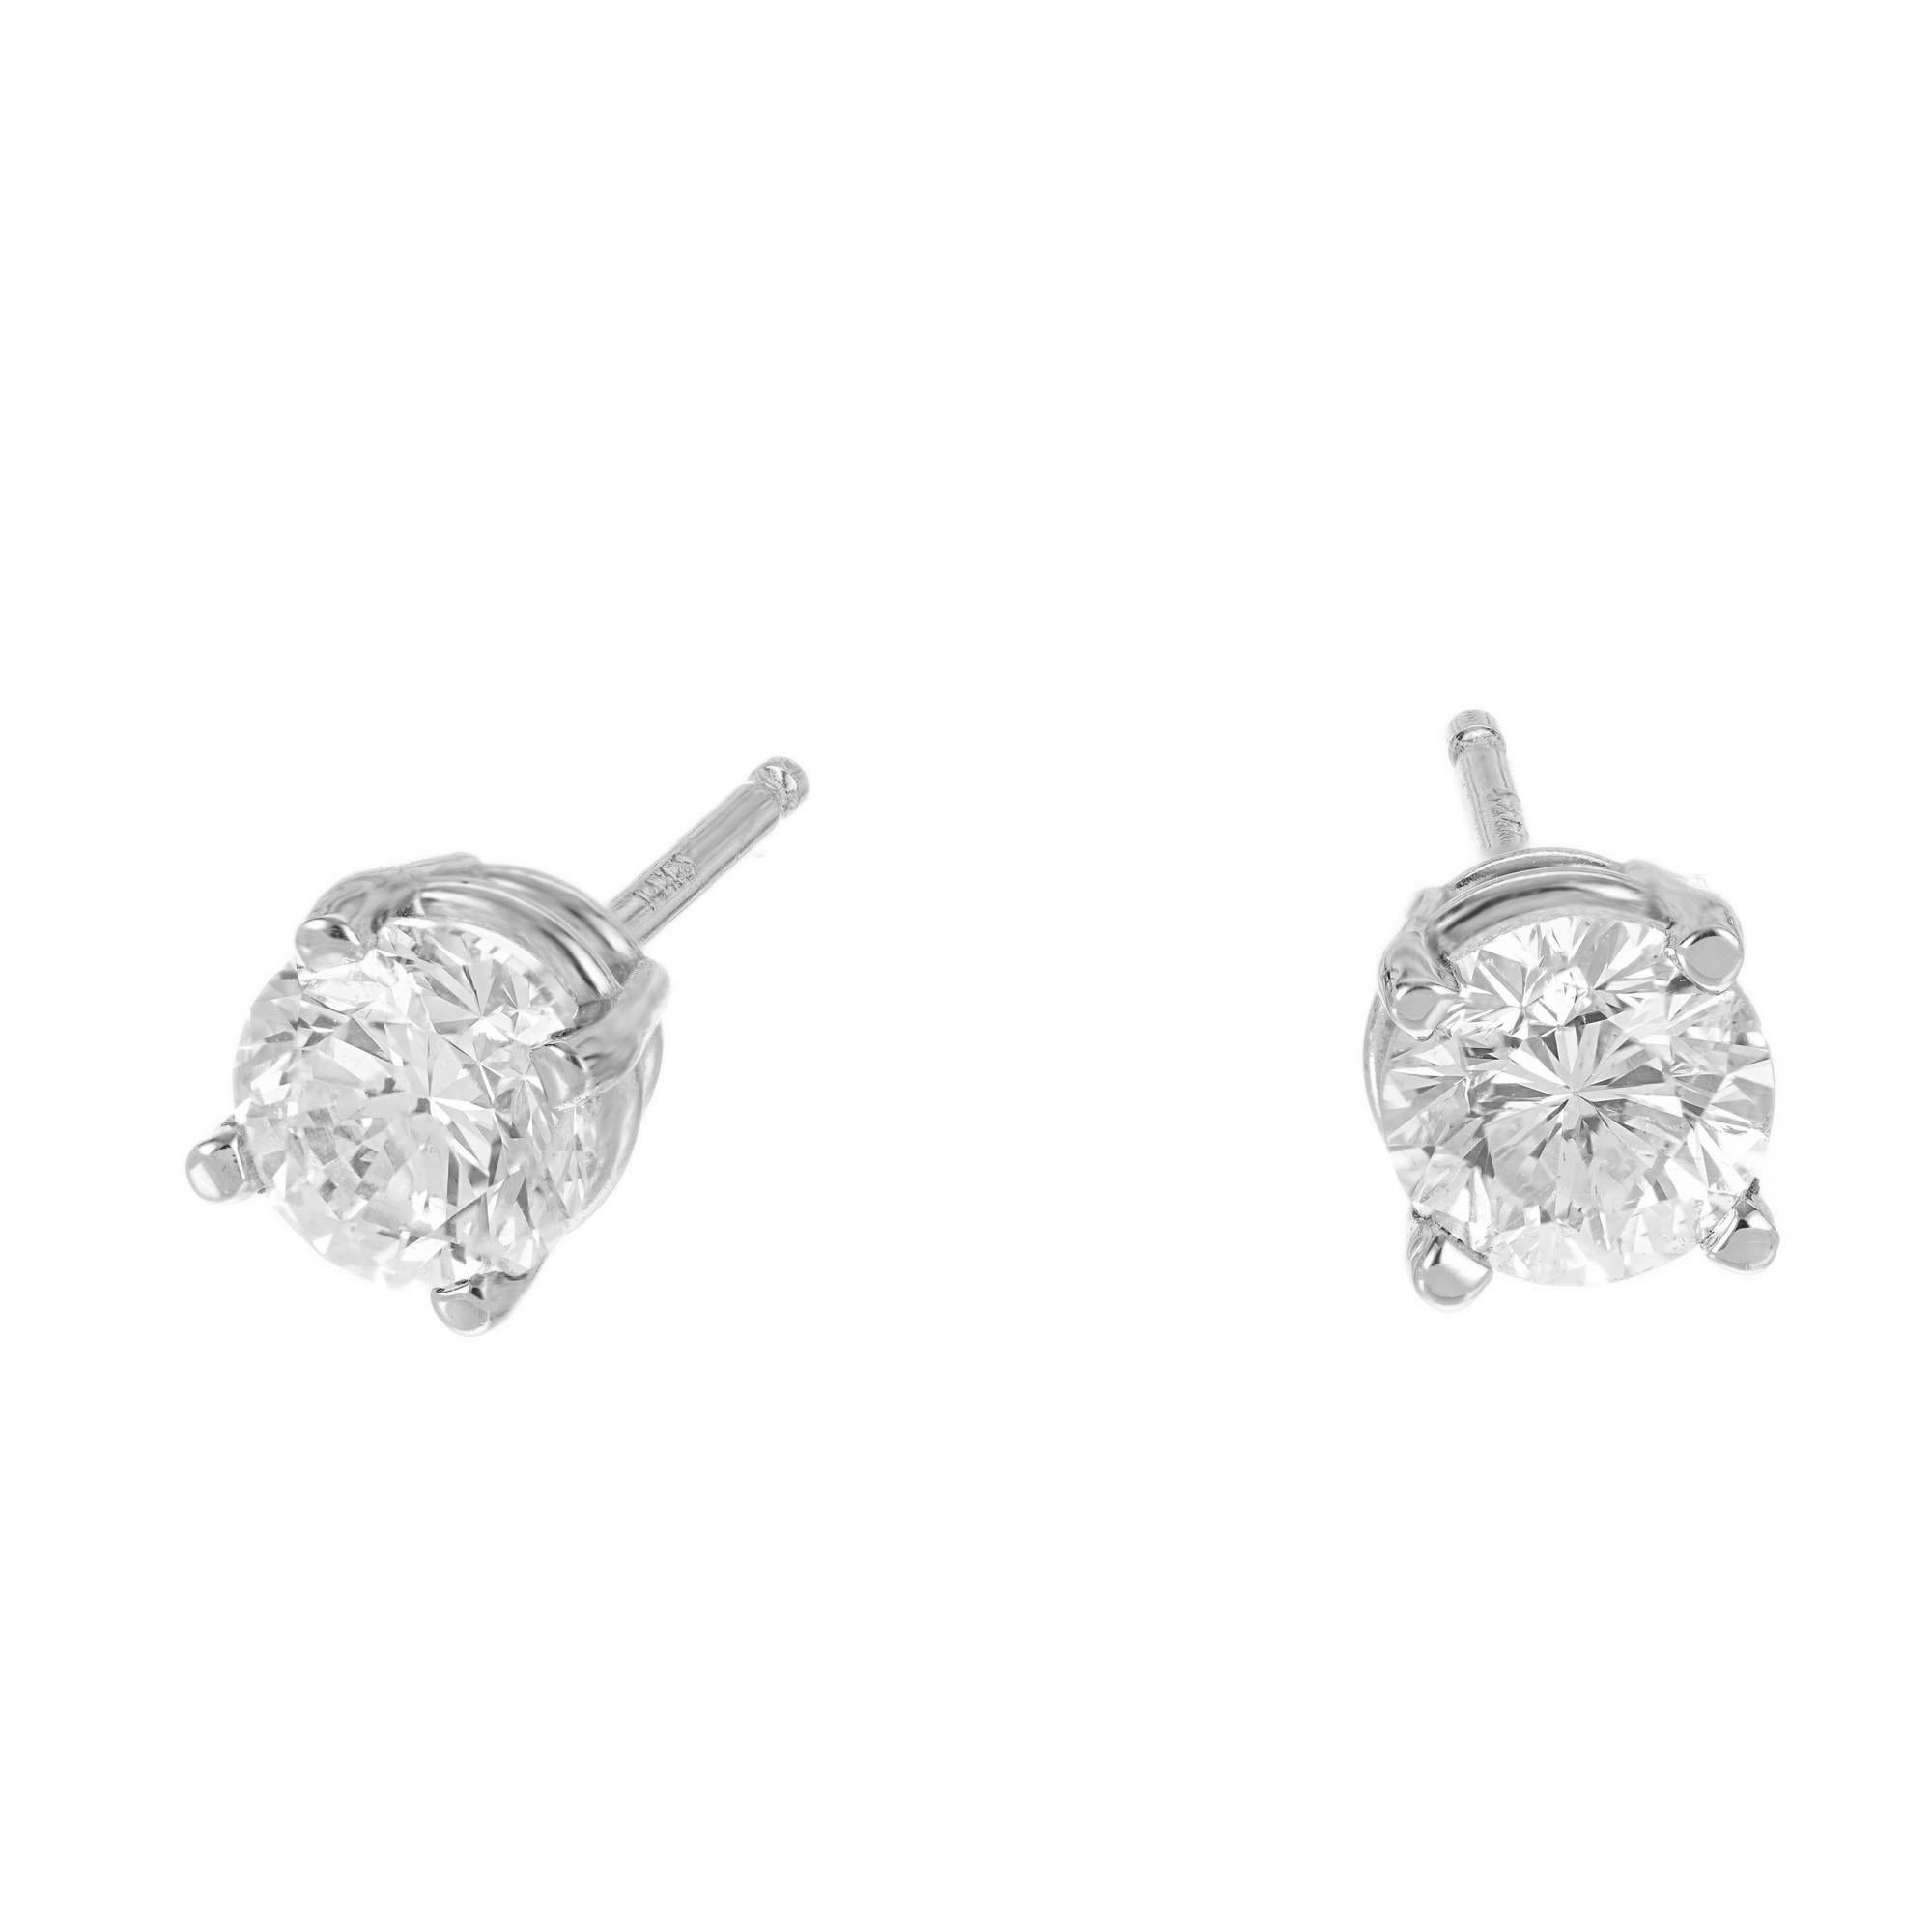 Round Cut 1.00 Carat Diamond Stud Earrings